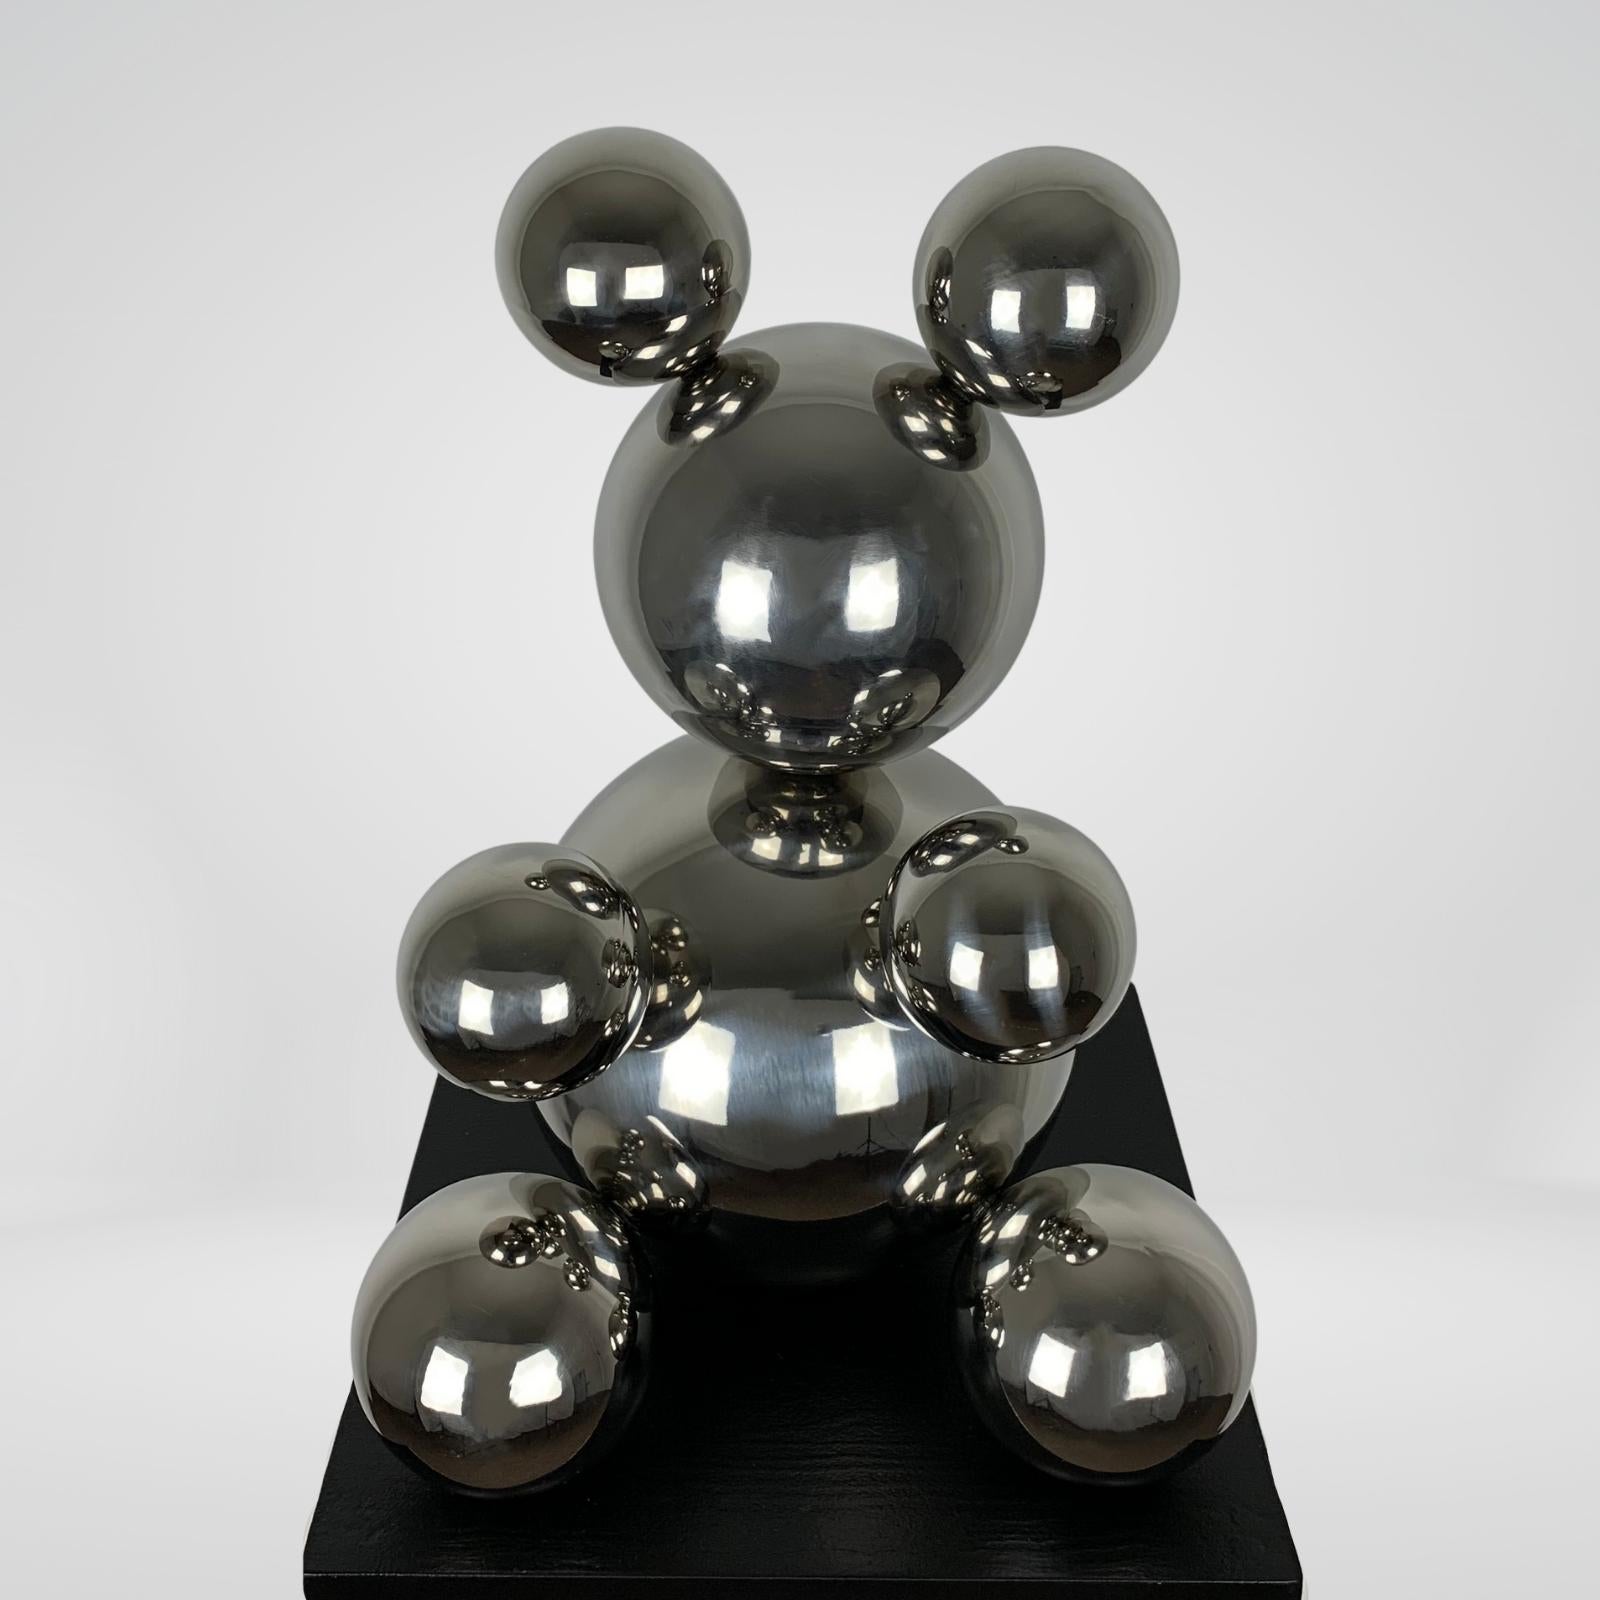 Big Stainless Steel Bear 'Browny' Sculpture Minimalistic Animal Art 3